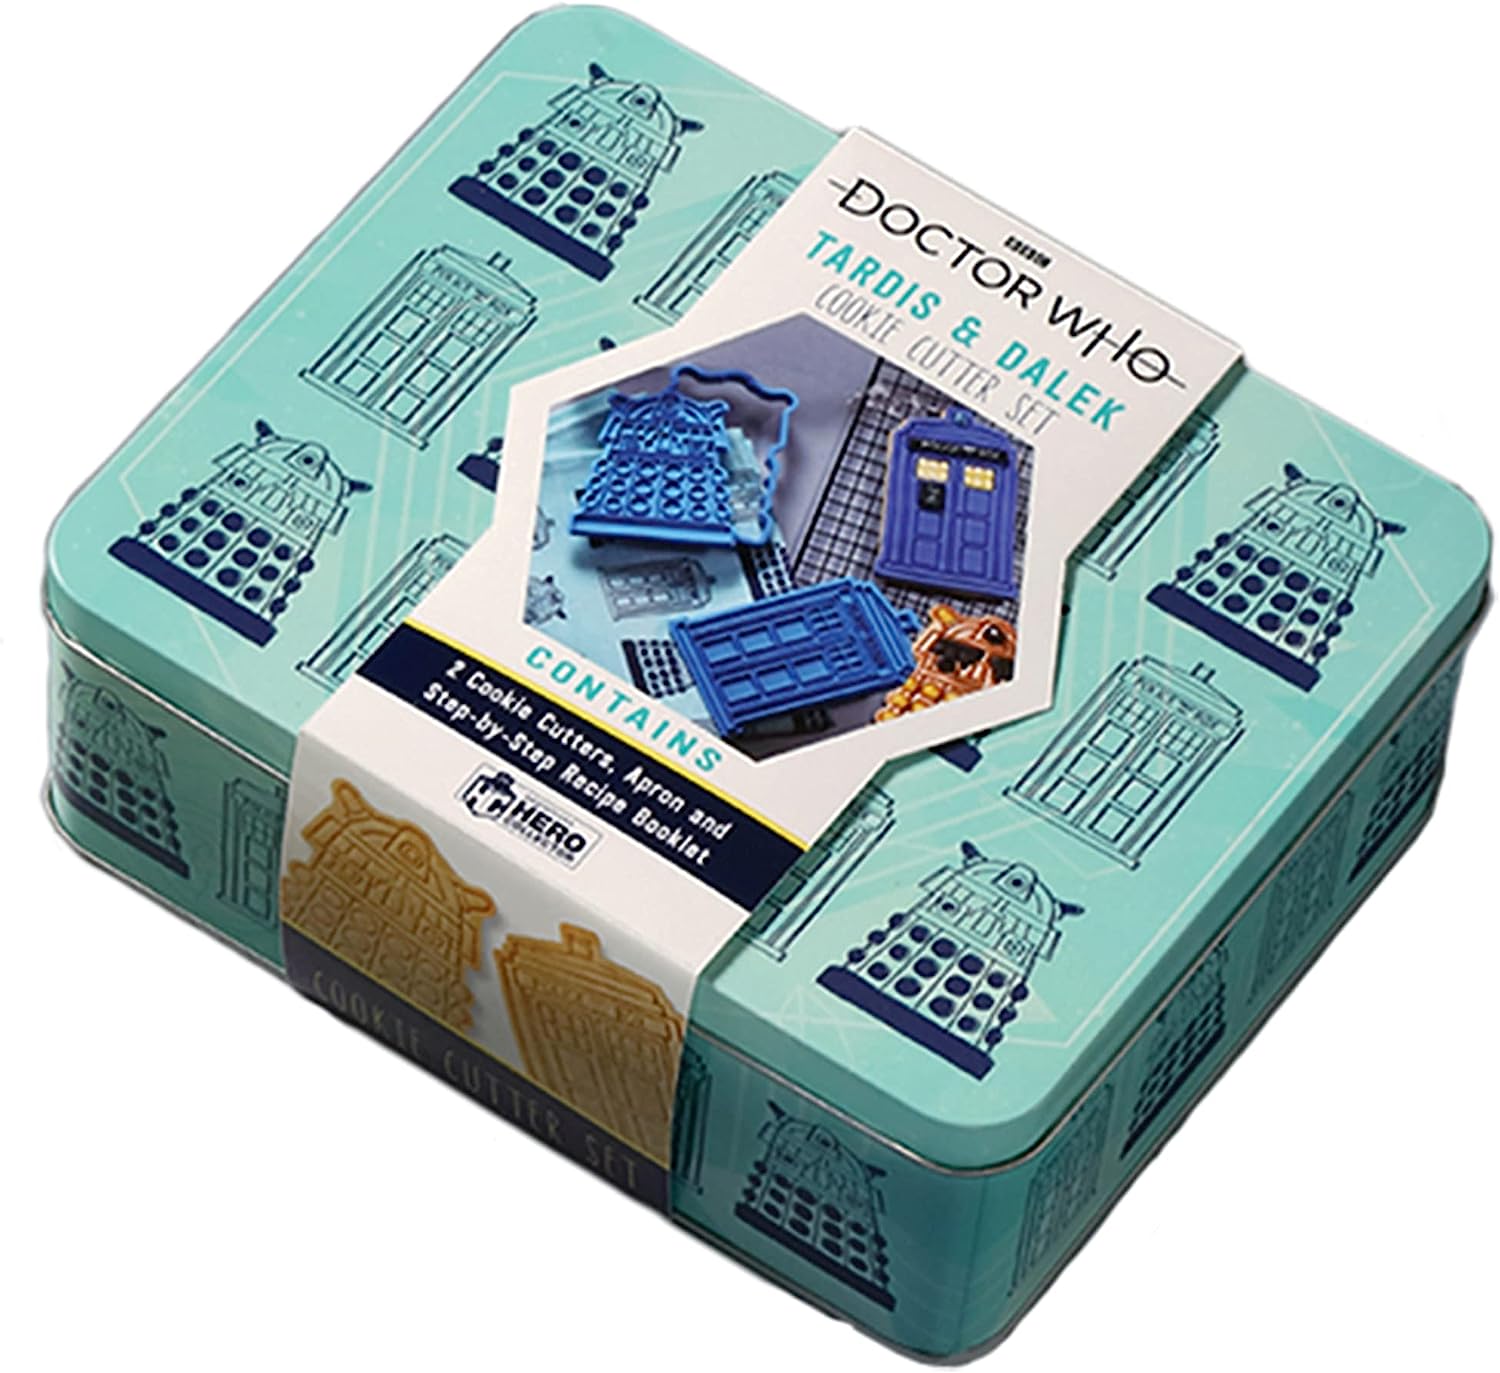 Doctor Who Tardis & Dalek Cookie Cutter & Apron Set in Tin